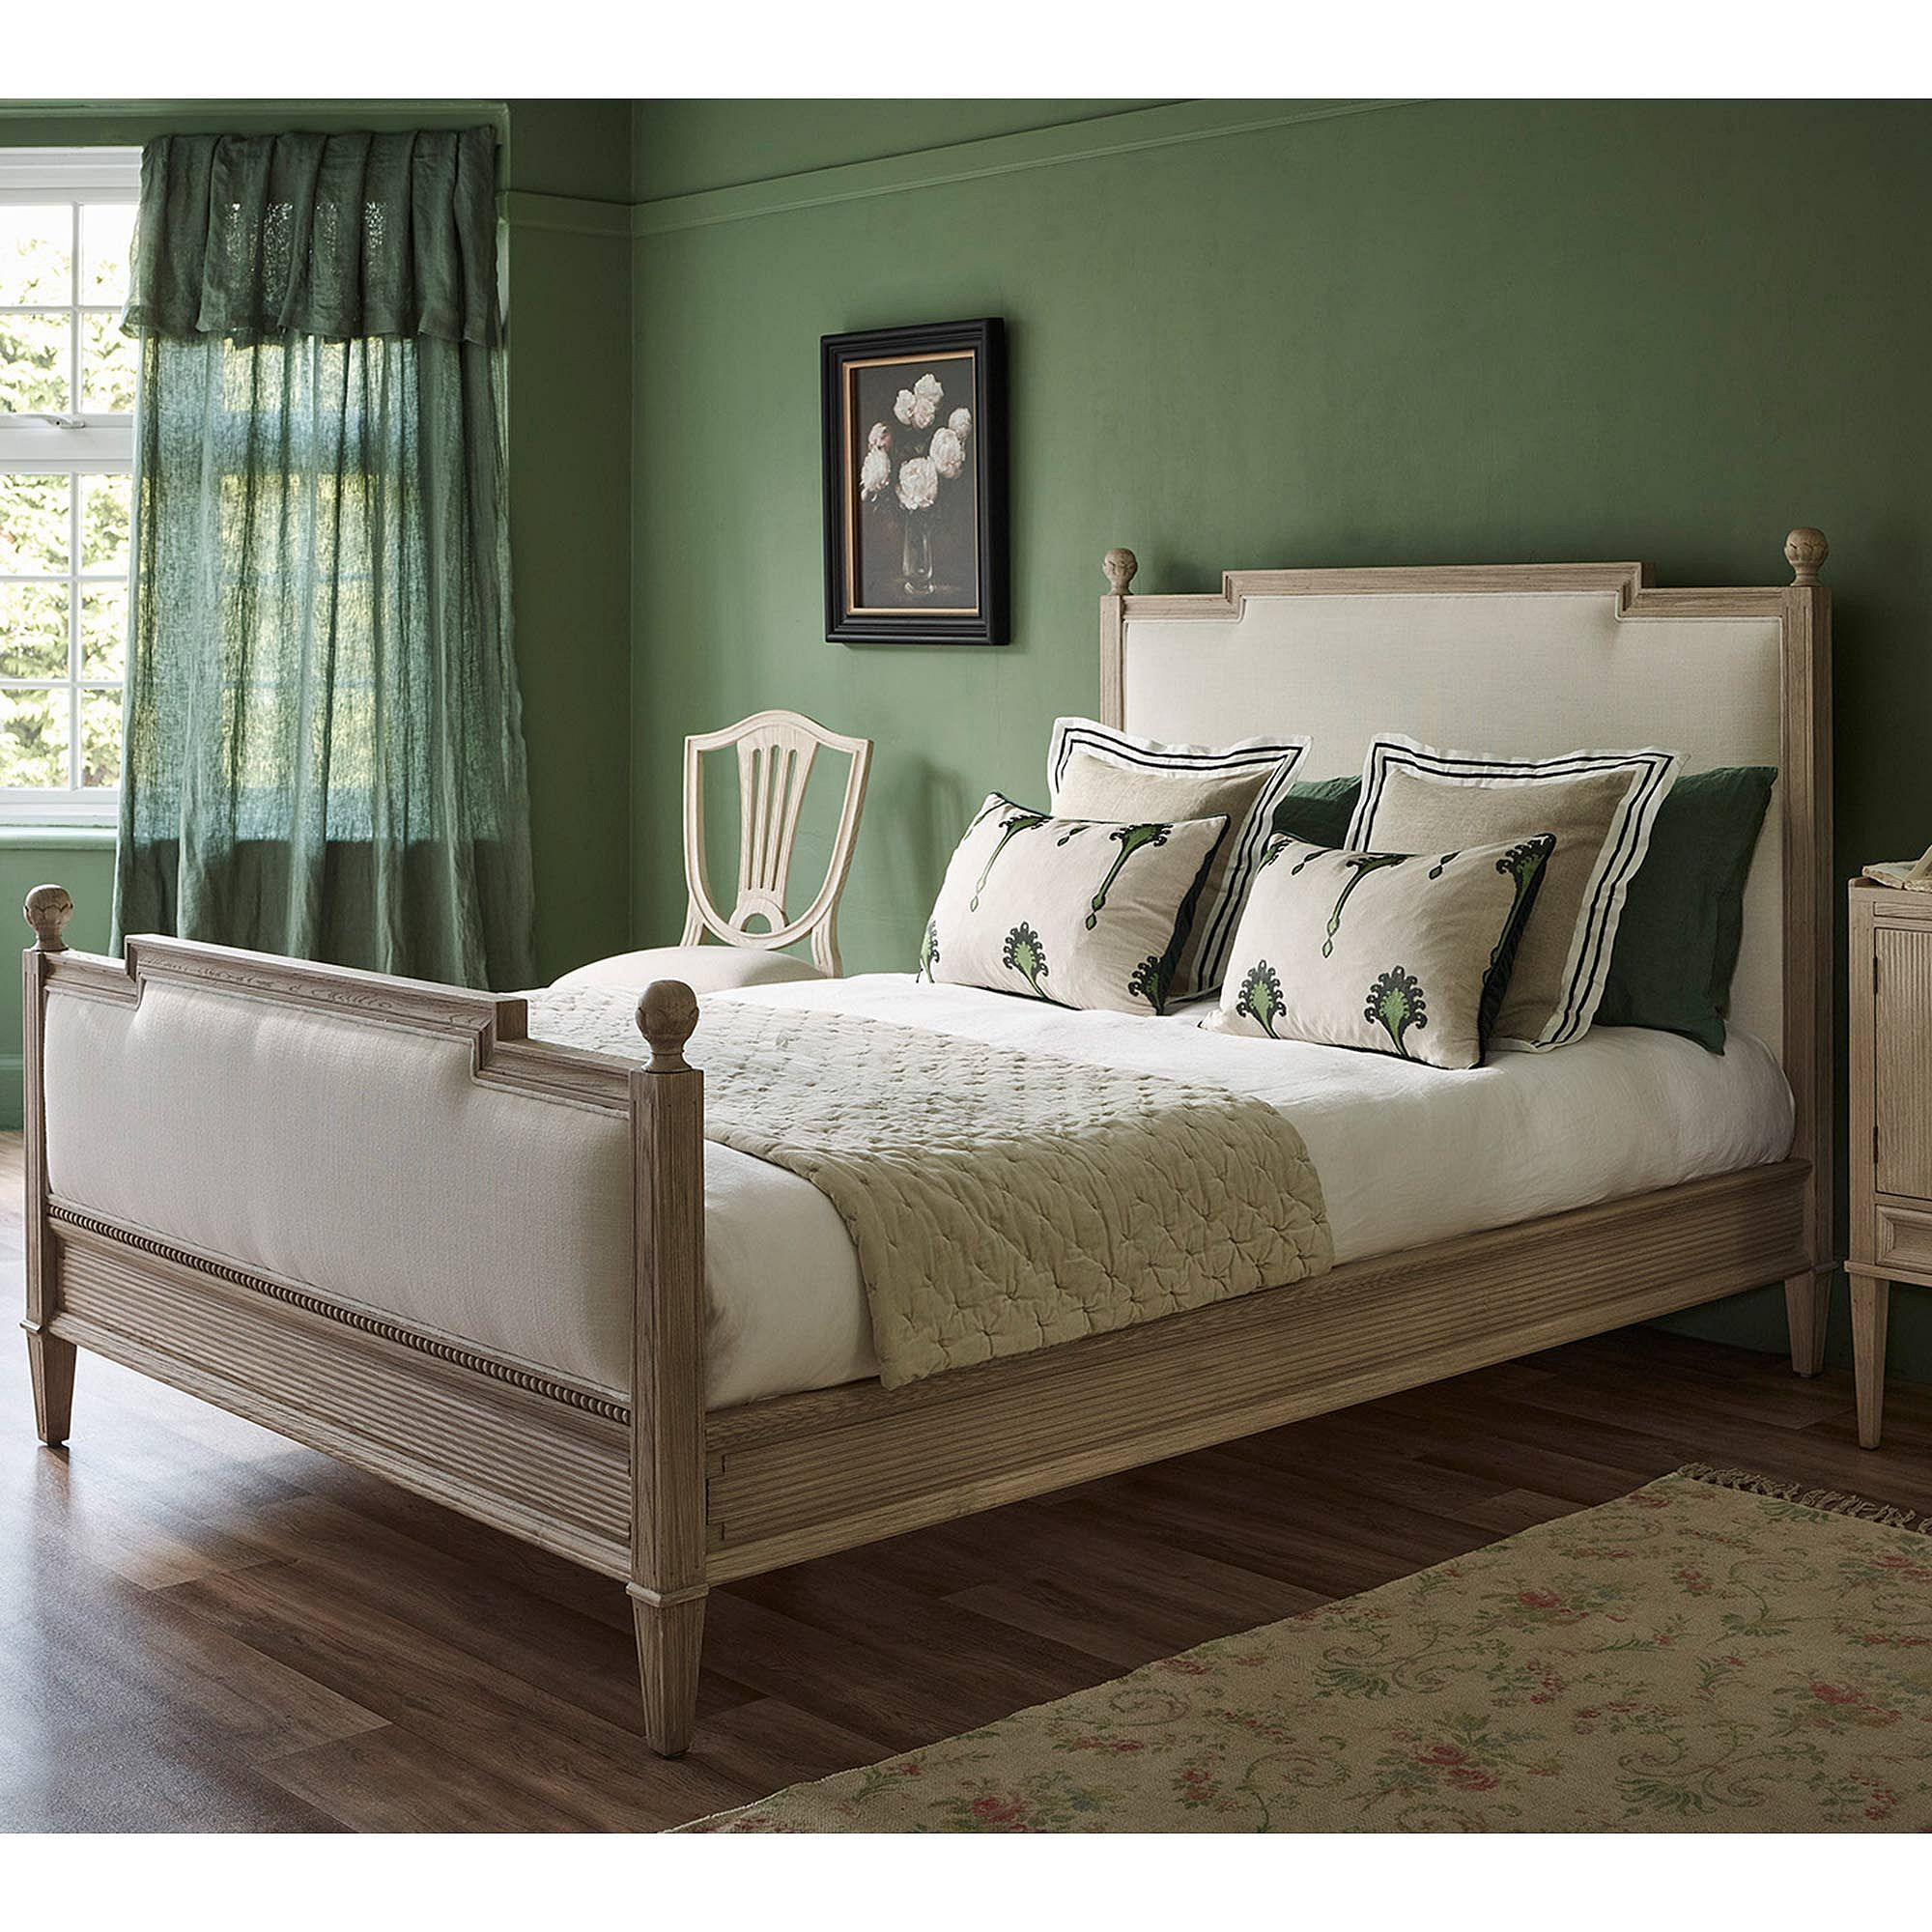 Gustavian Upholstered Bed (King Size Bed) - image 1